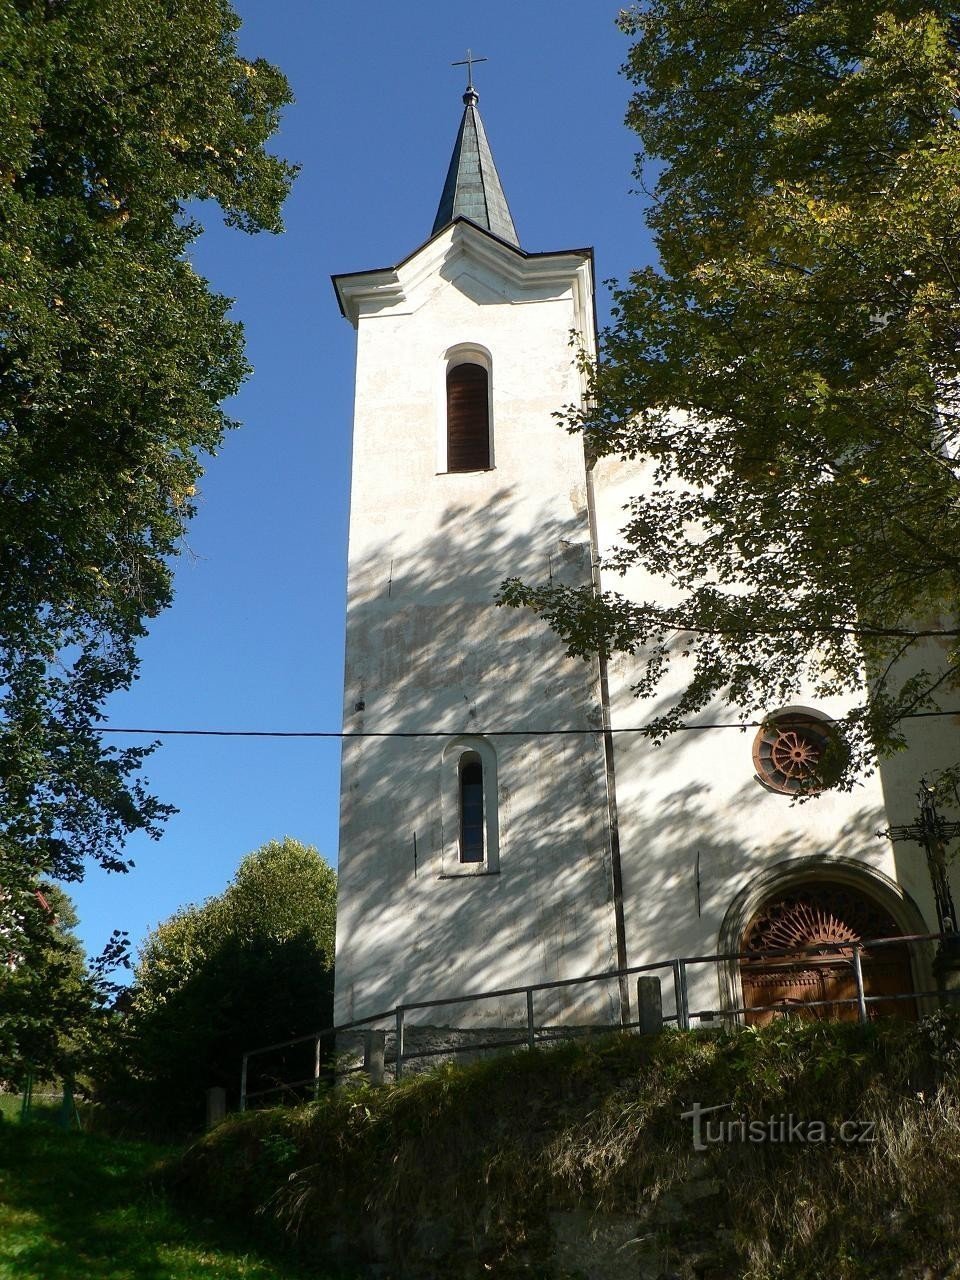 La torre de la iglesia de P. Marie Sněžné, Kašperské Hory